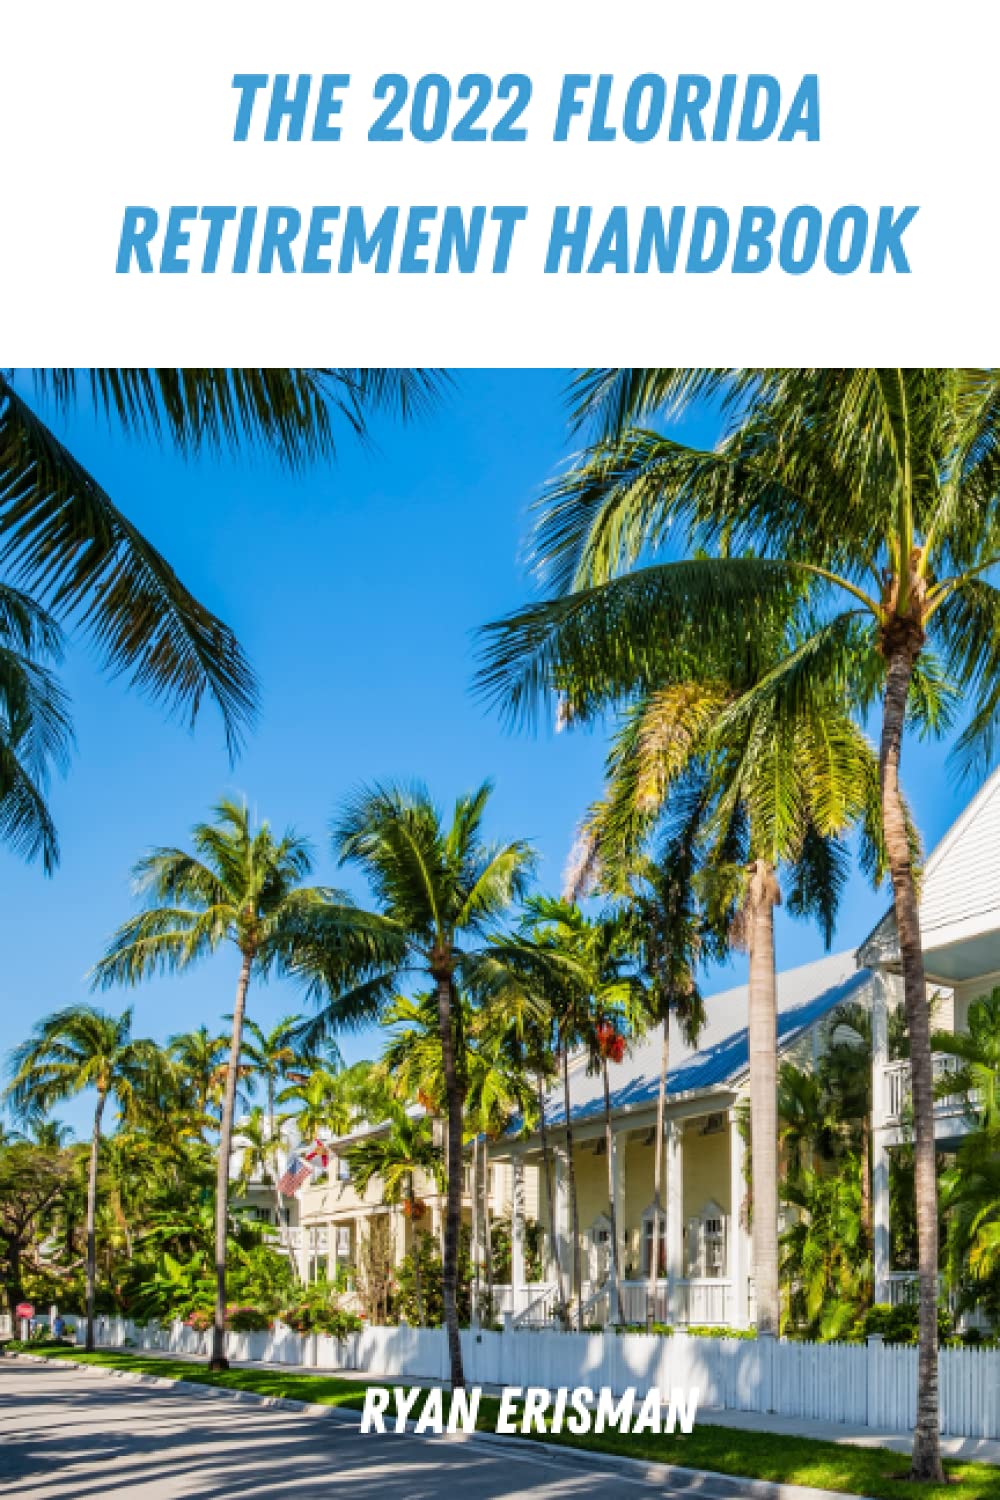 The 2022 Florida Retirement Handbook